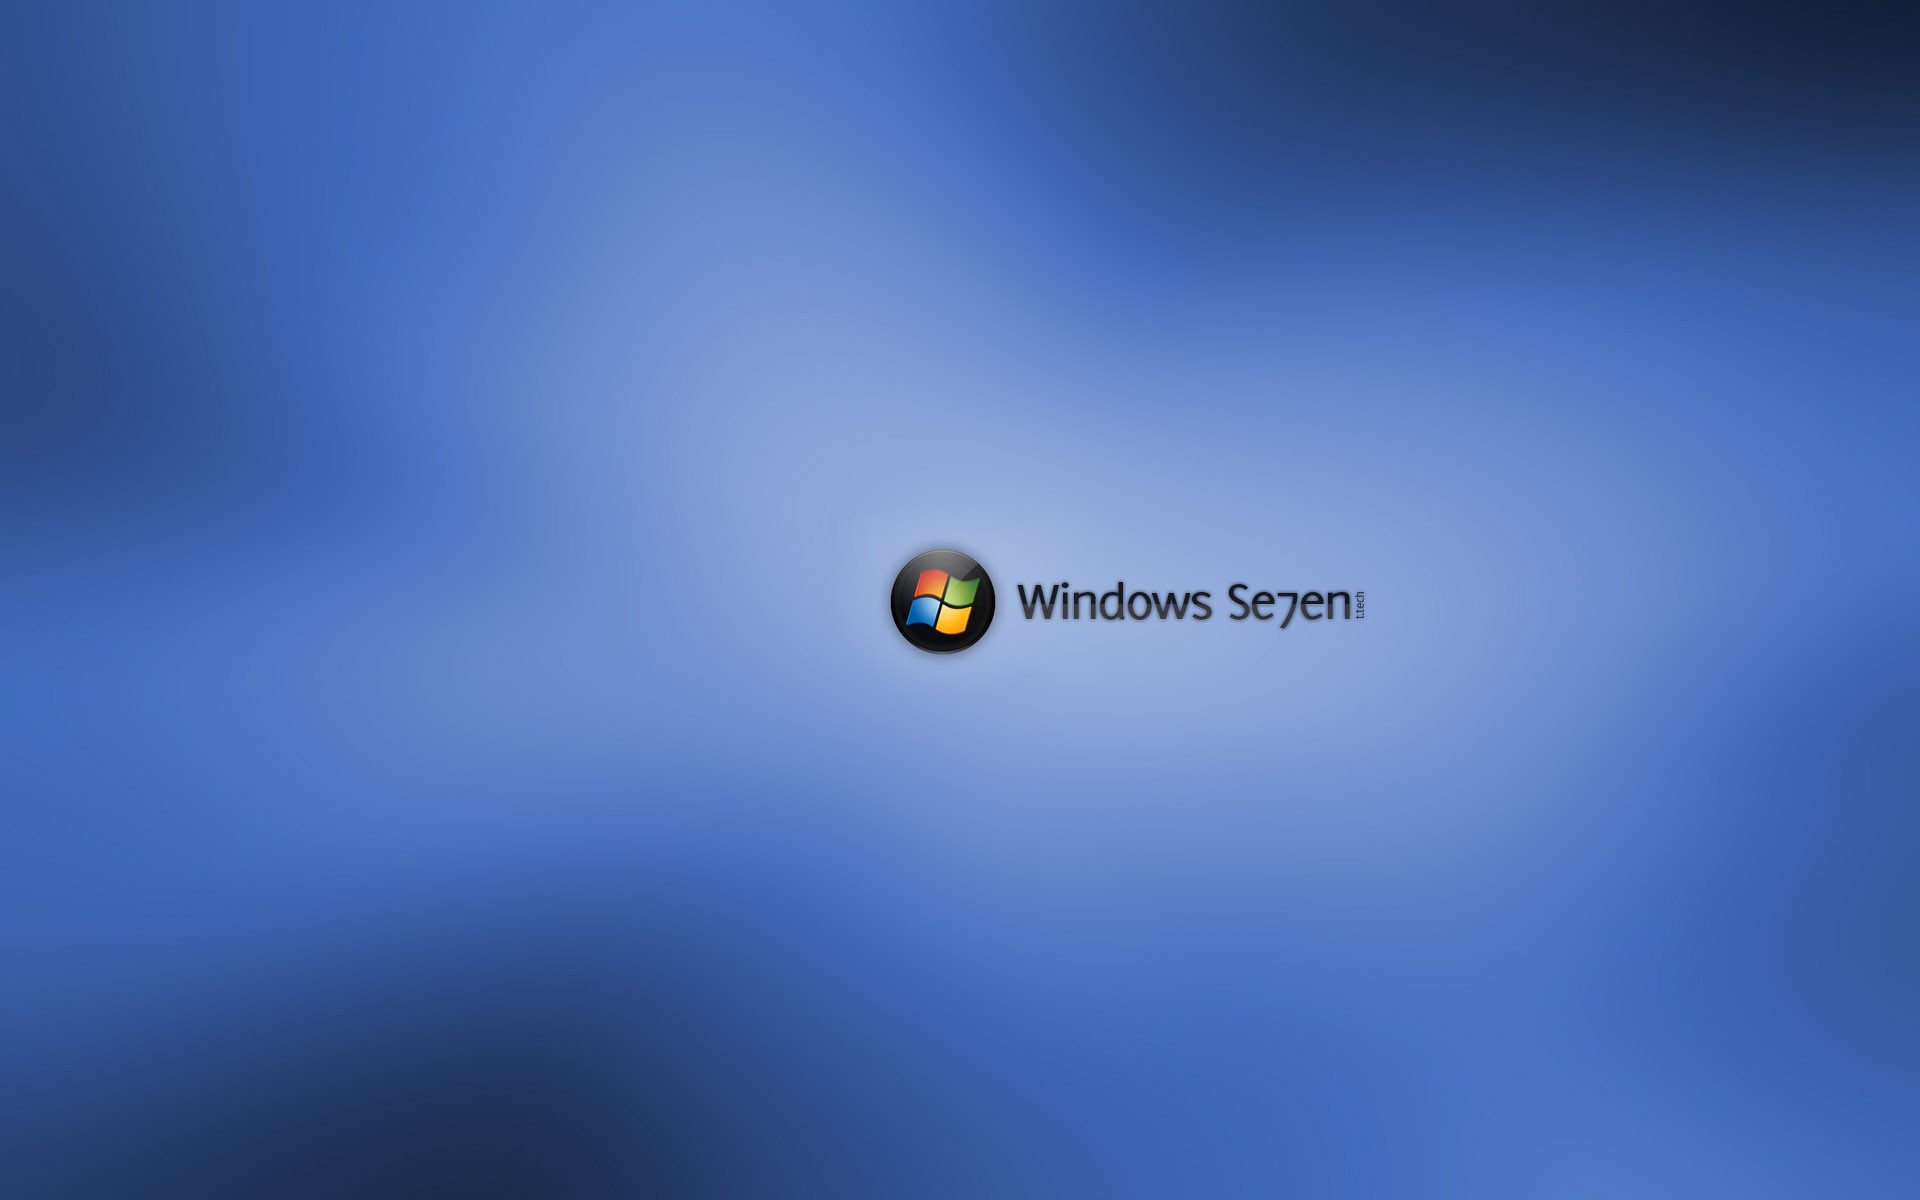 Windows 7 - desktop wallpaper